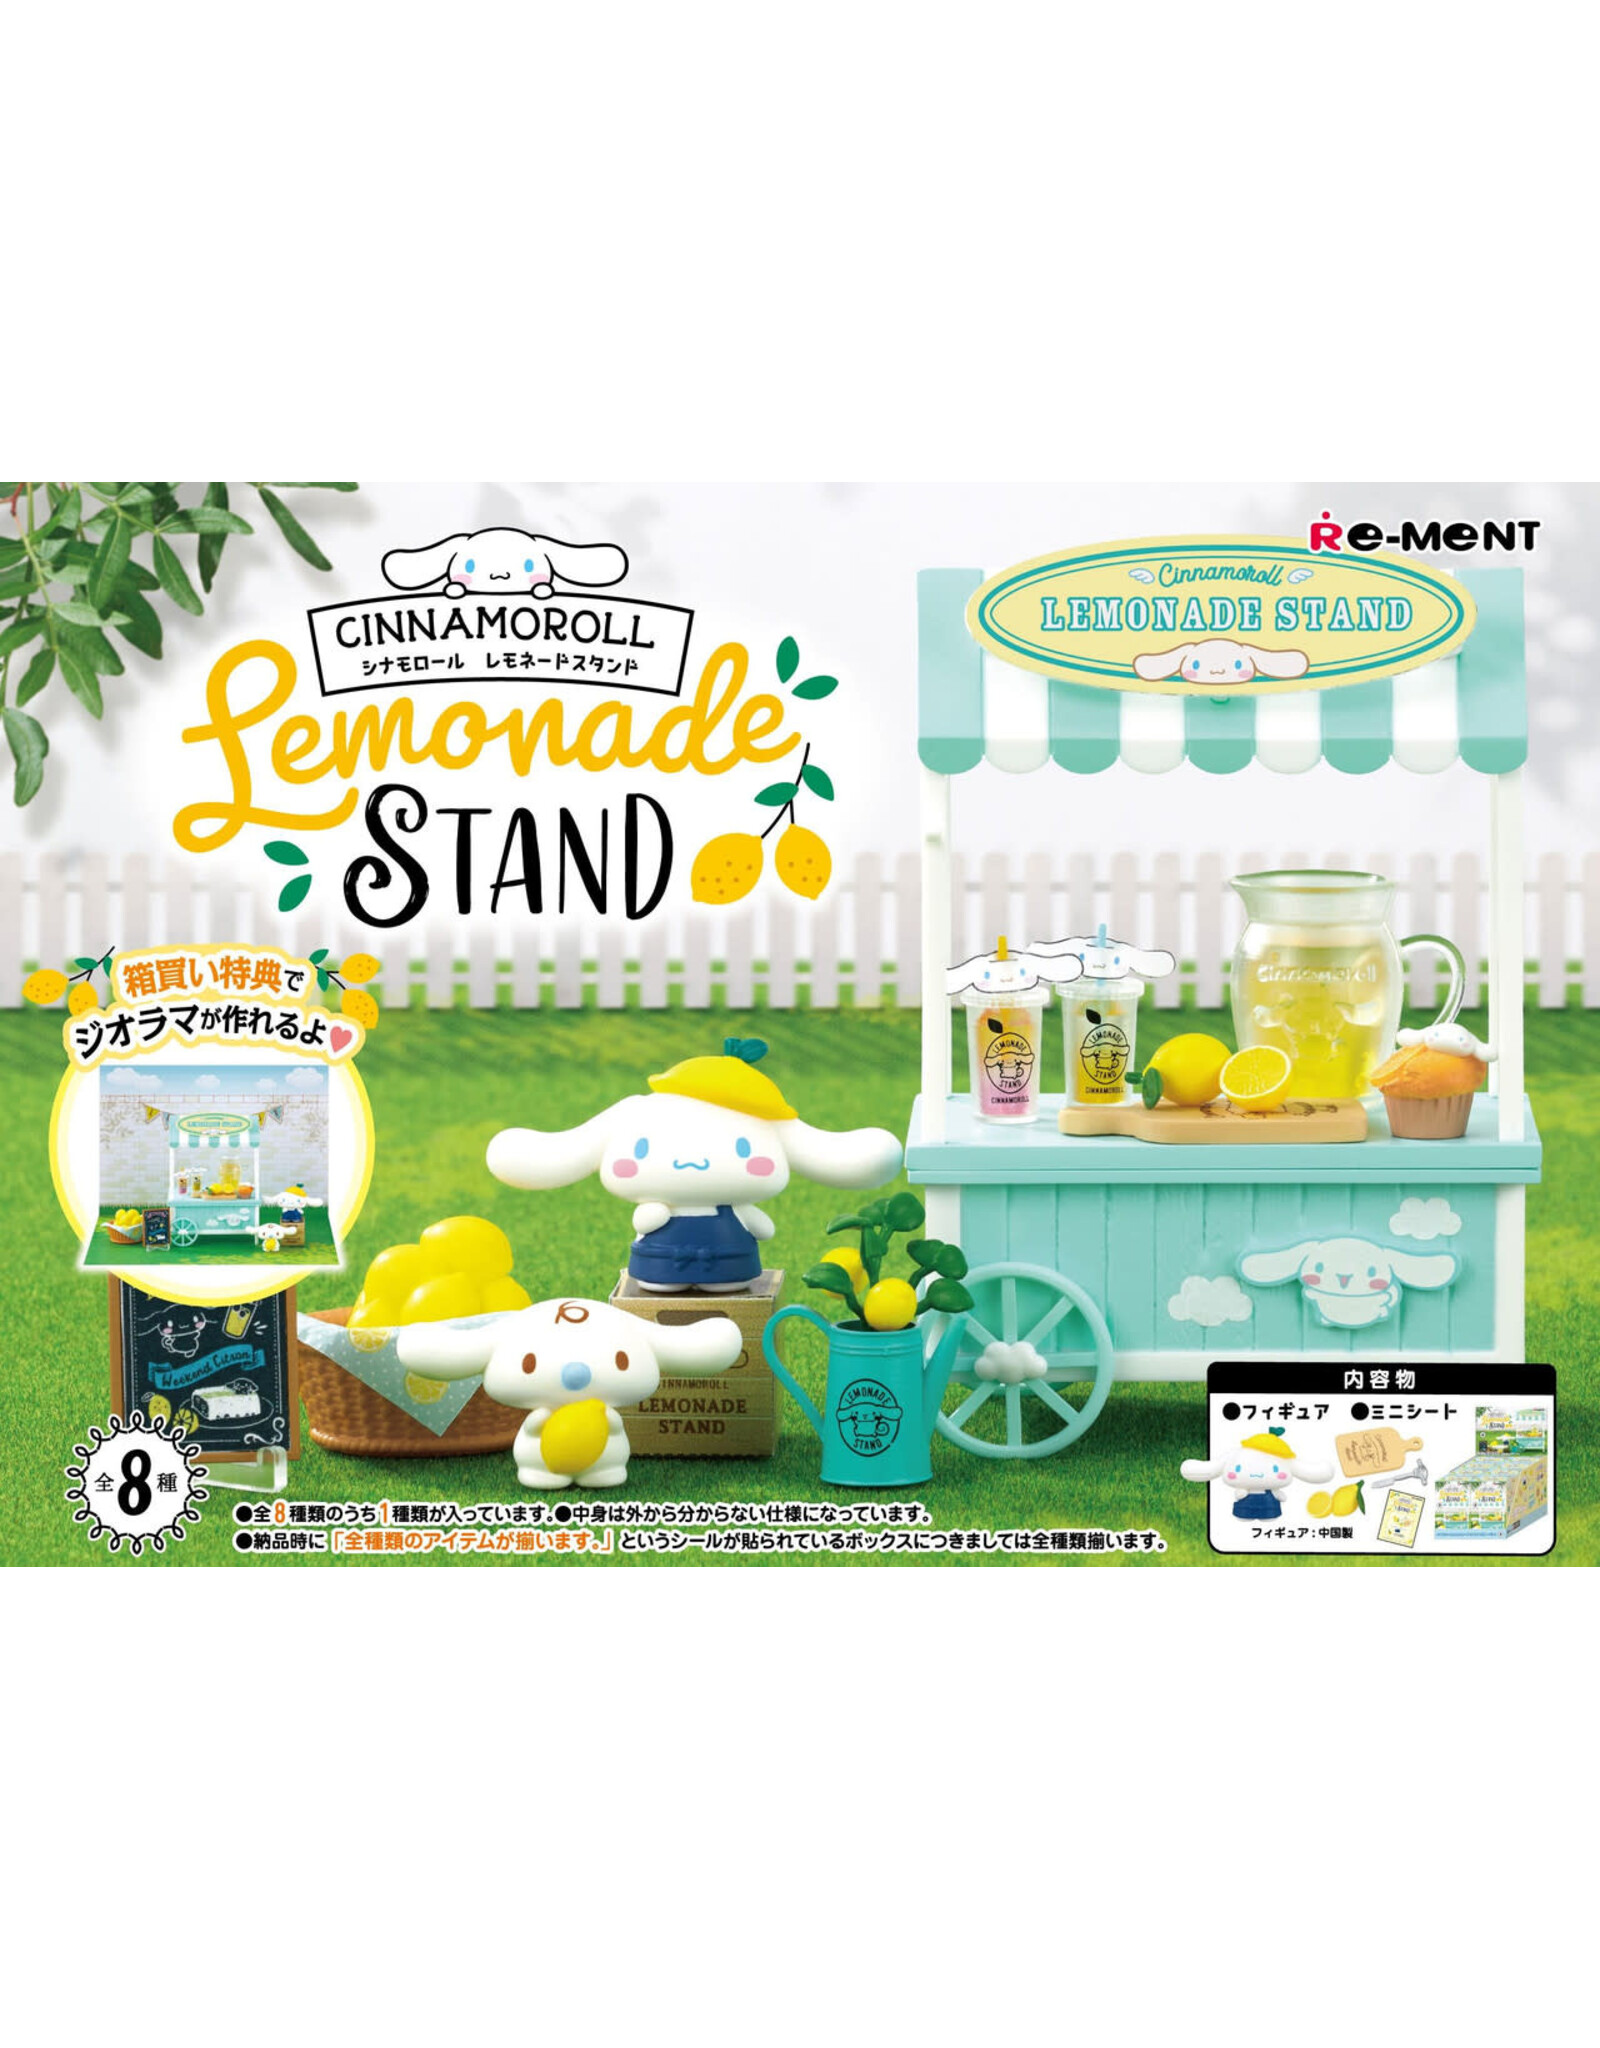 Re-Ment - Cinnamoroll - Lemonade Stand - 1 random item